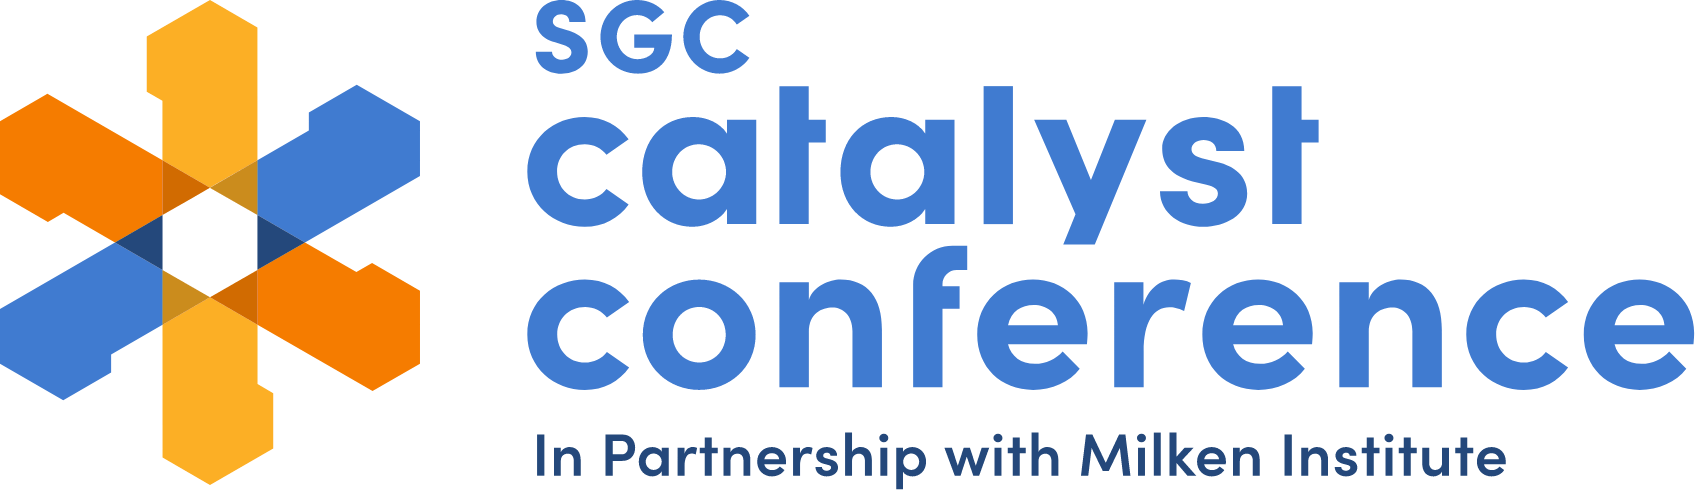 SGC Catalyst Conference logo